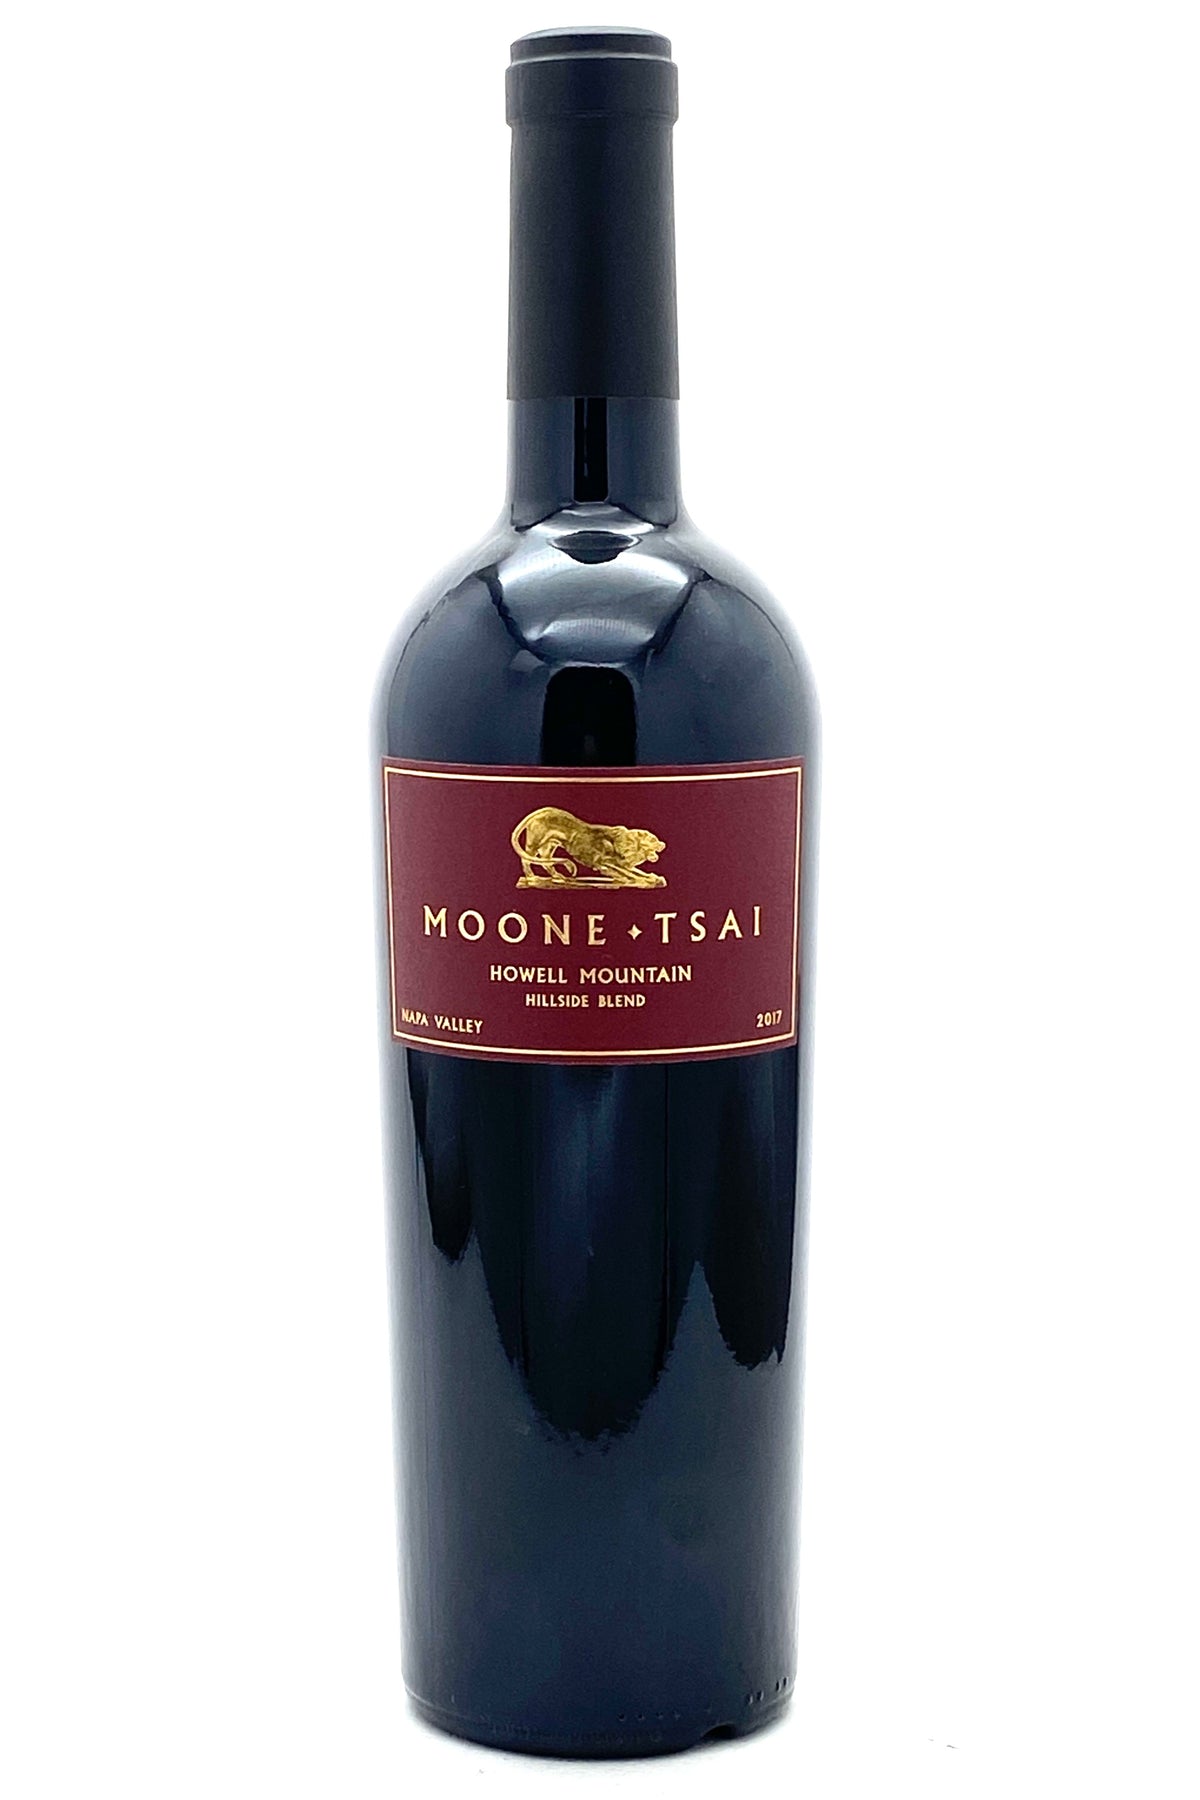 Moone-Tsai 2017 Howell Mountain Hillside Blend Red Wine